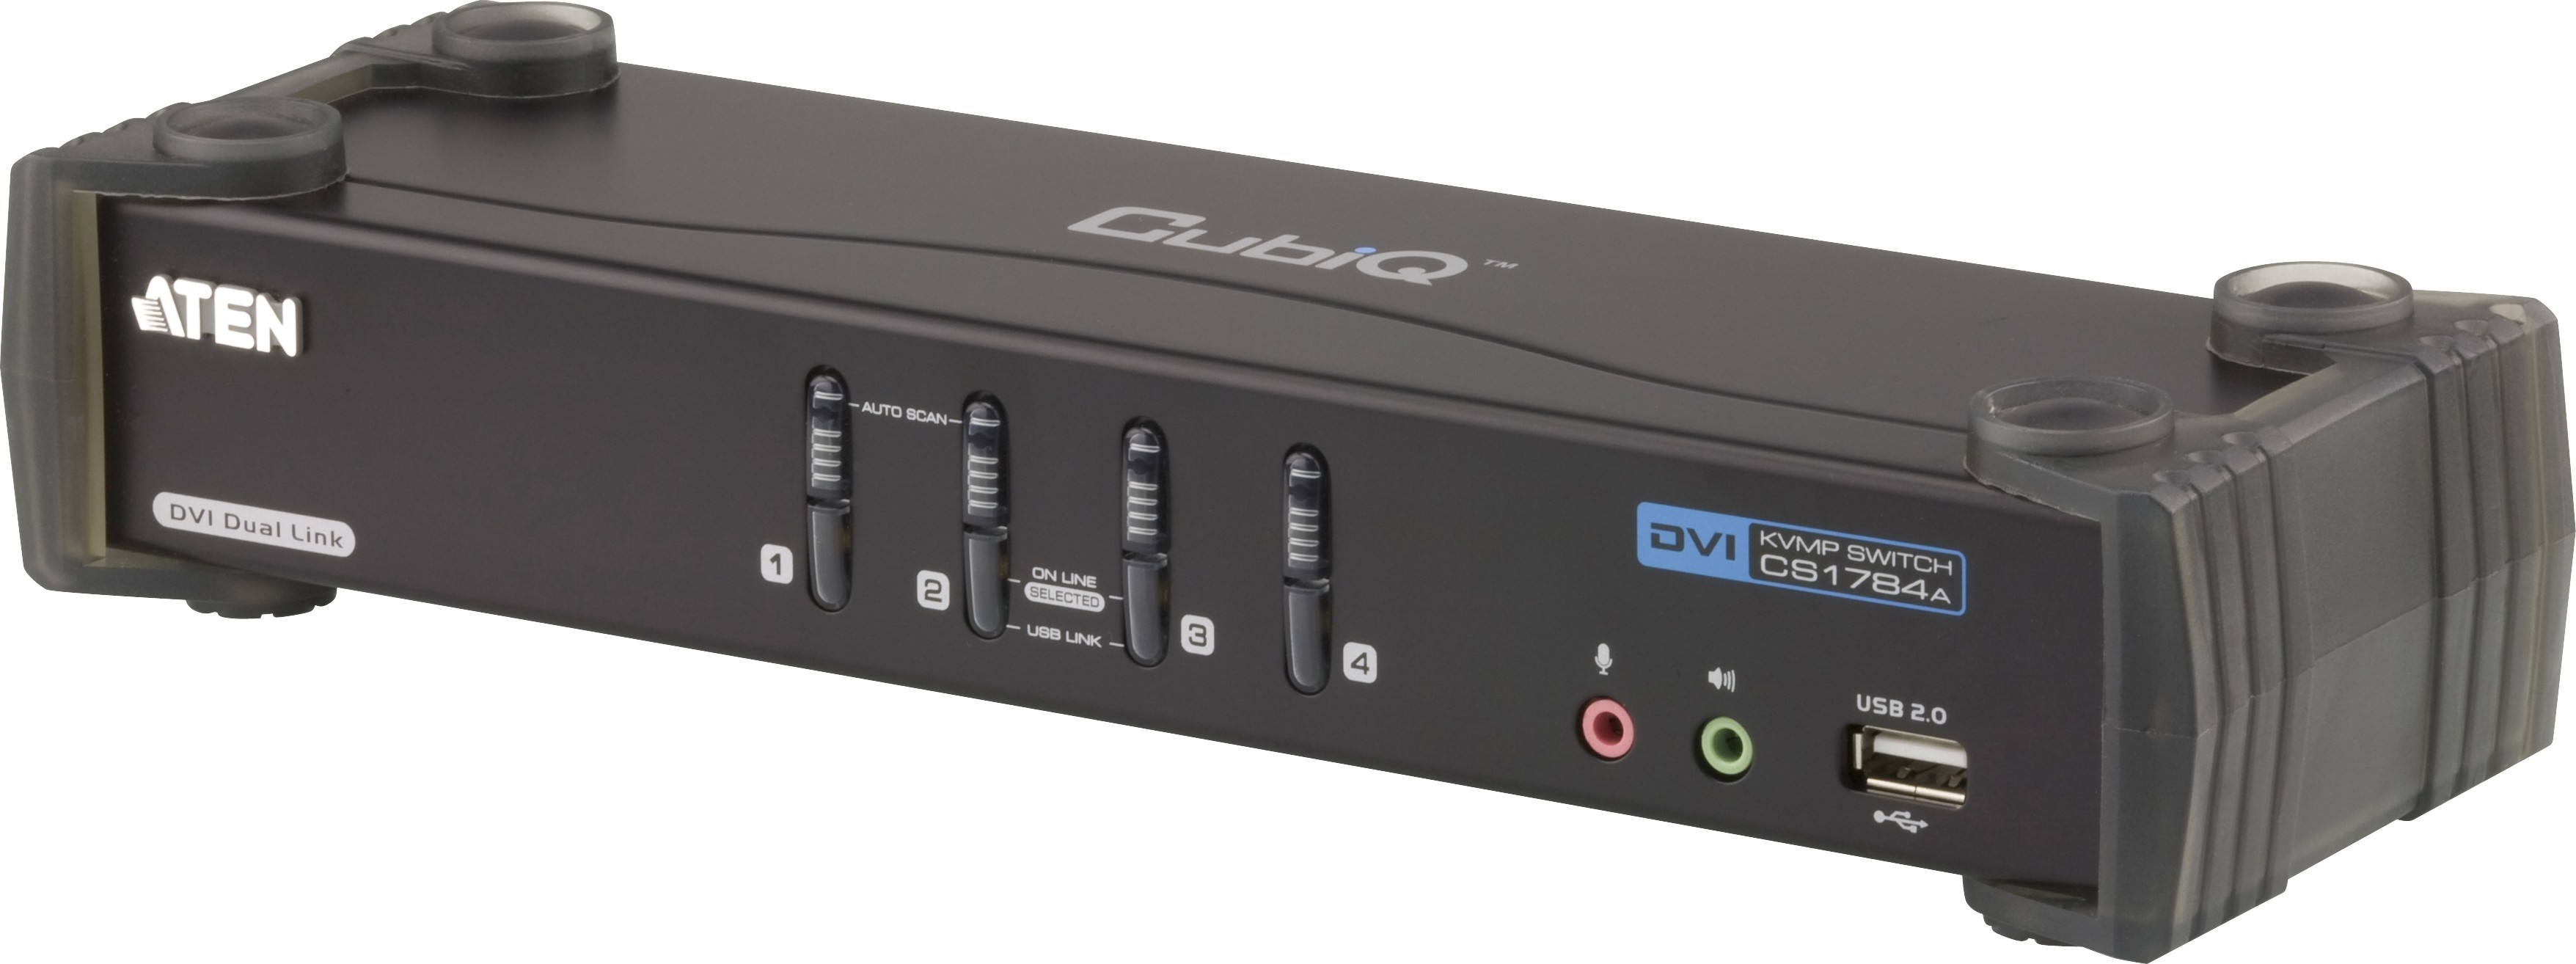 Переключатель KVM (КВМ) ATEN CS1784A, 4-ПК, USB, USB, видео DVI-I 2560x1600, 4-комплекта KVM-кабелей DVI-D (CS1784A-AT-G)